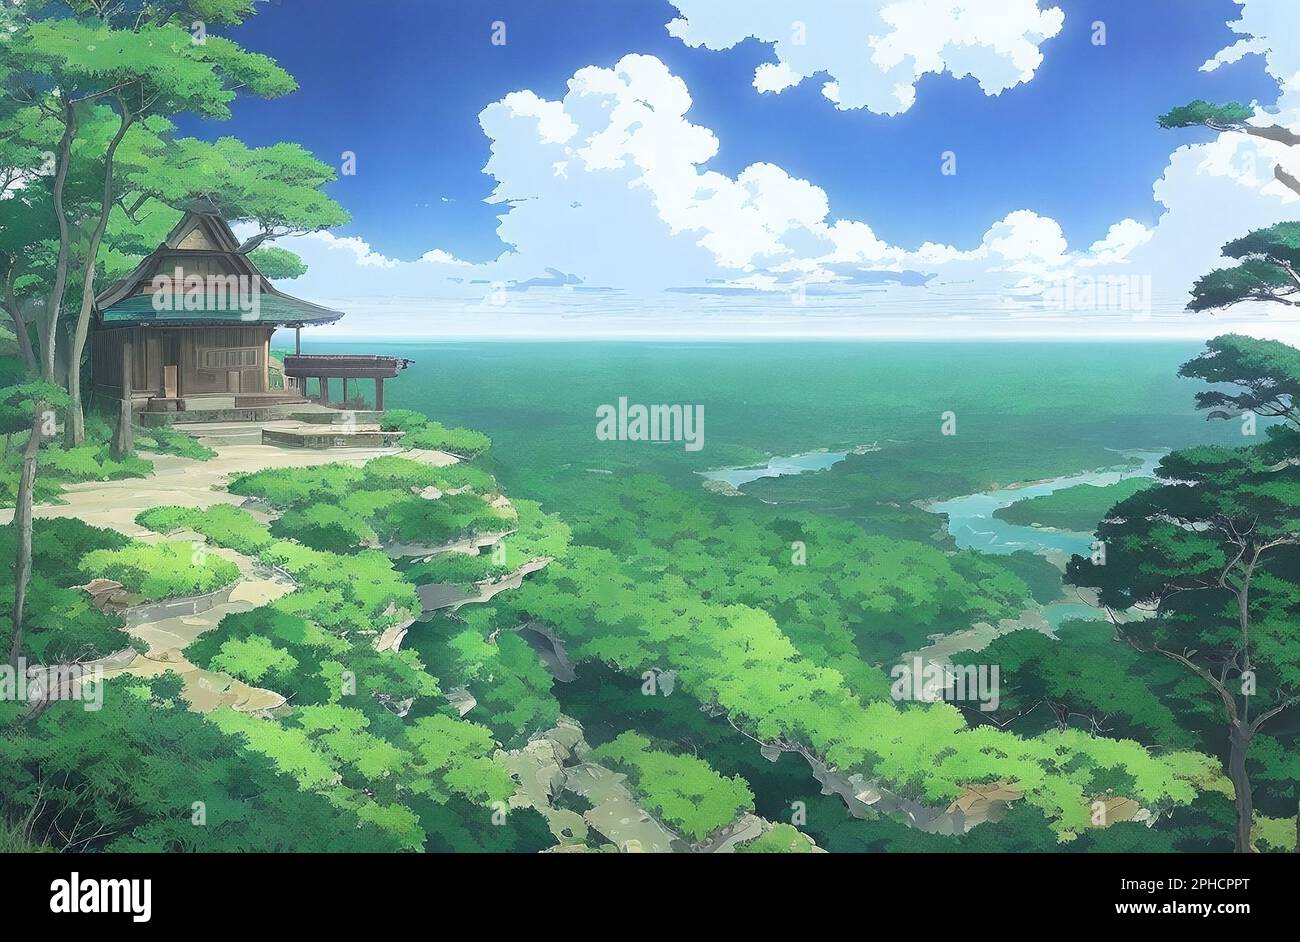 Free customizable anime desktop wallpaper templates | Canva